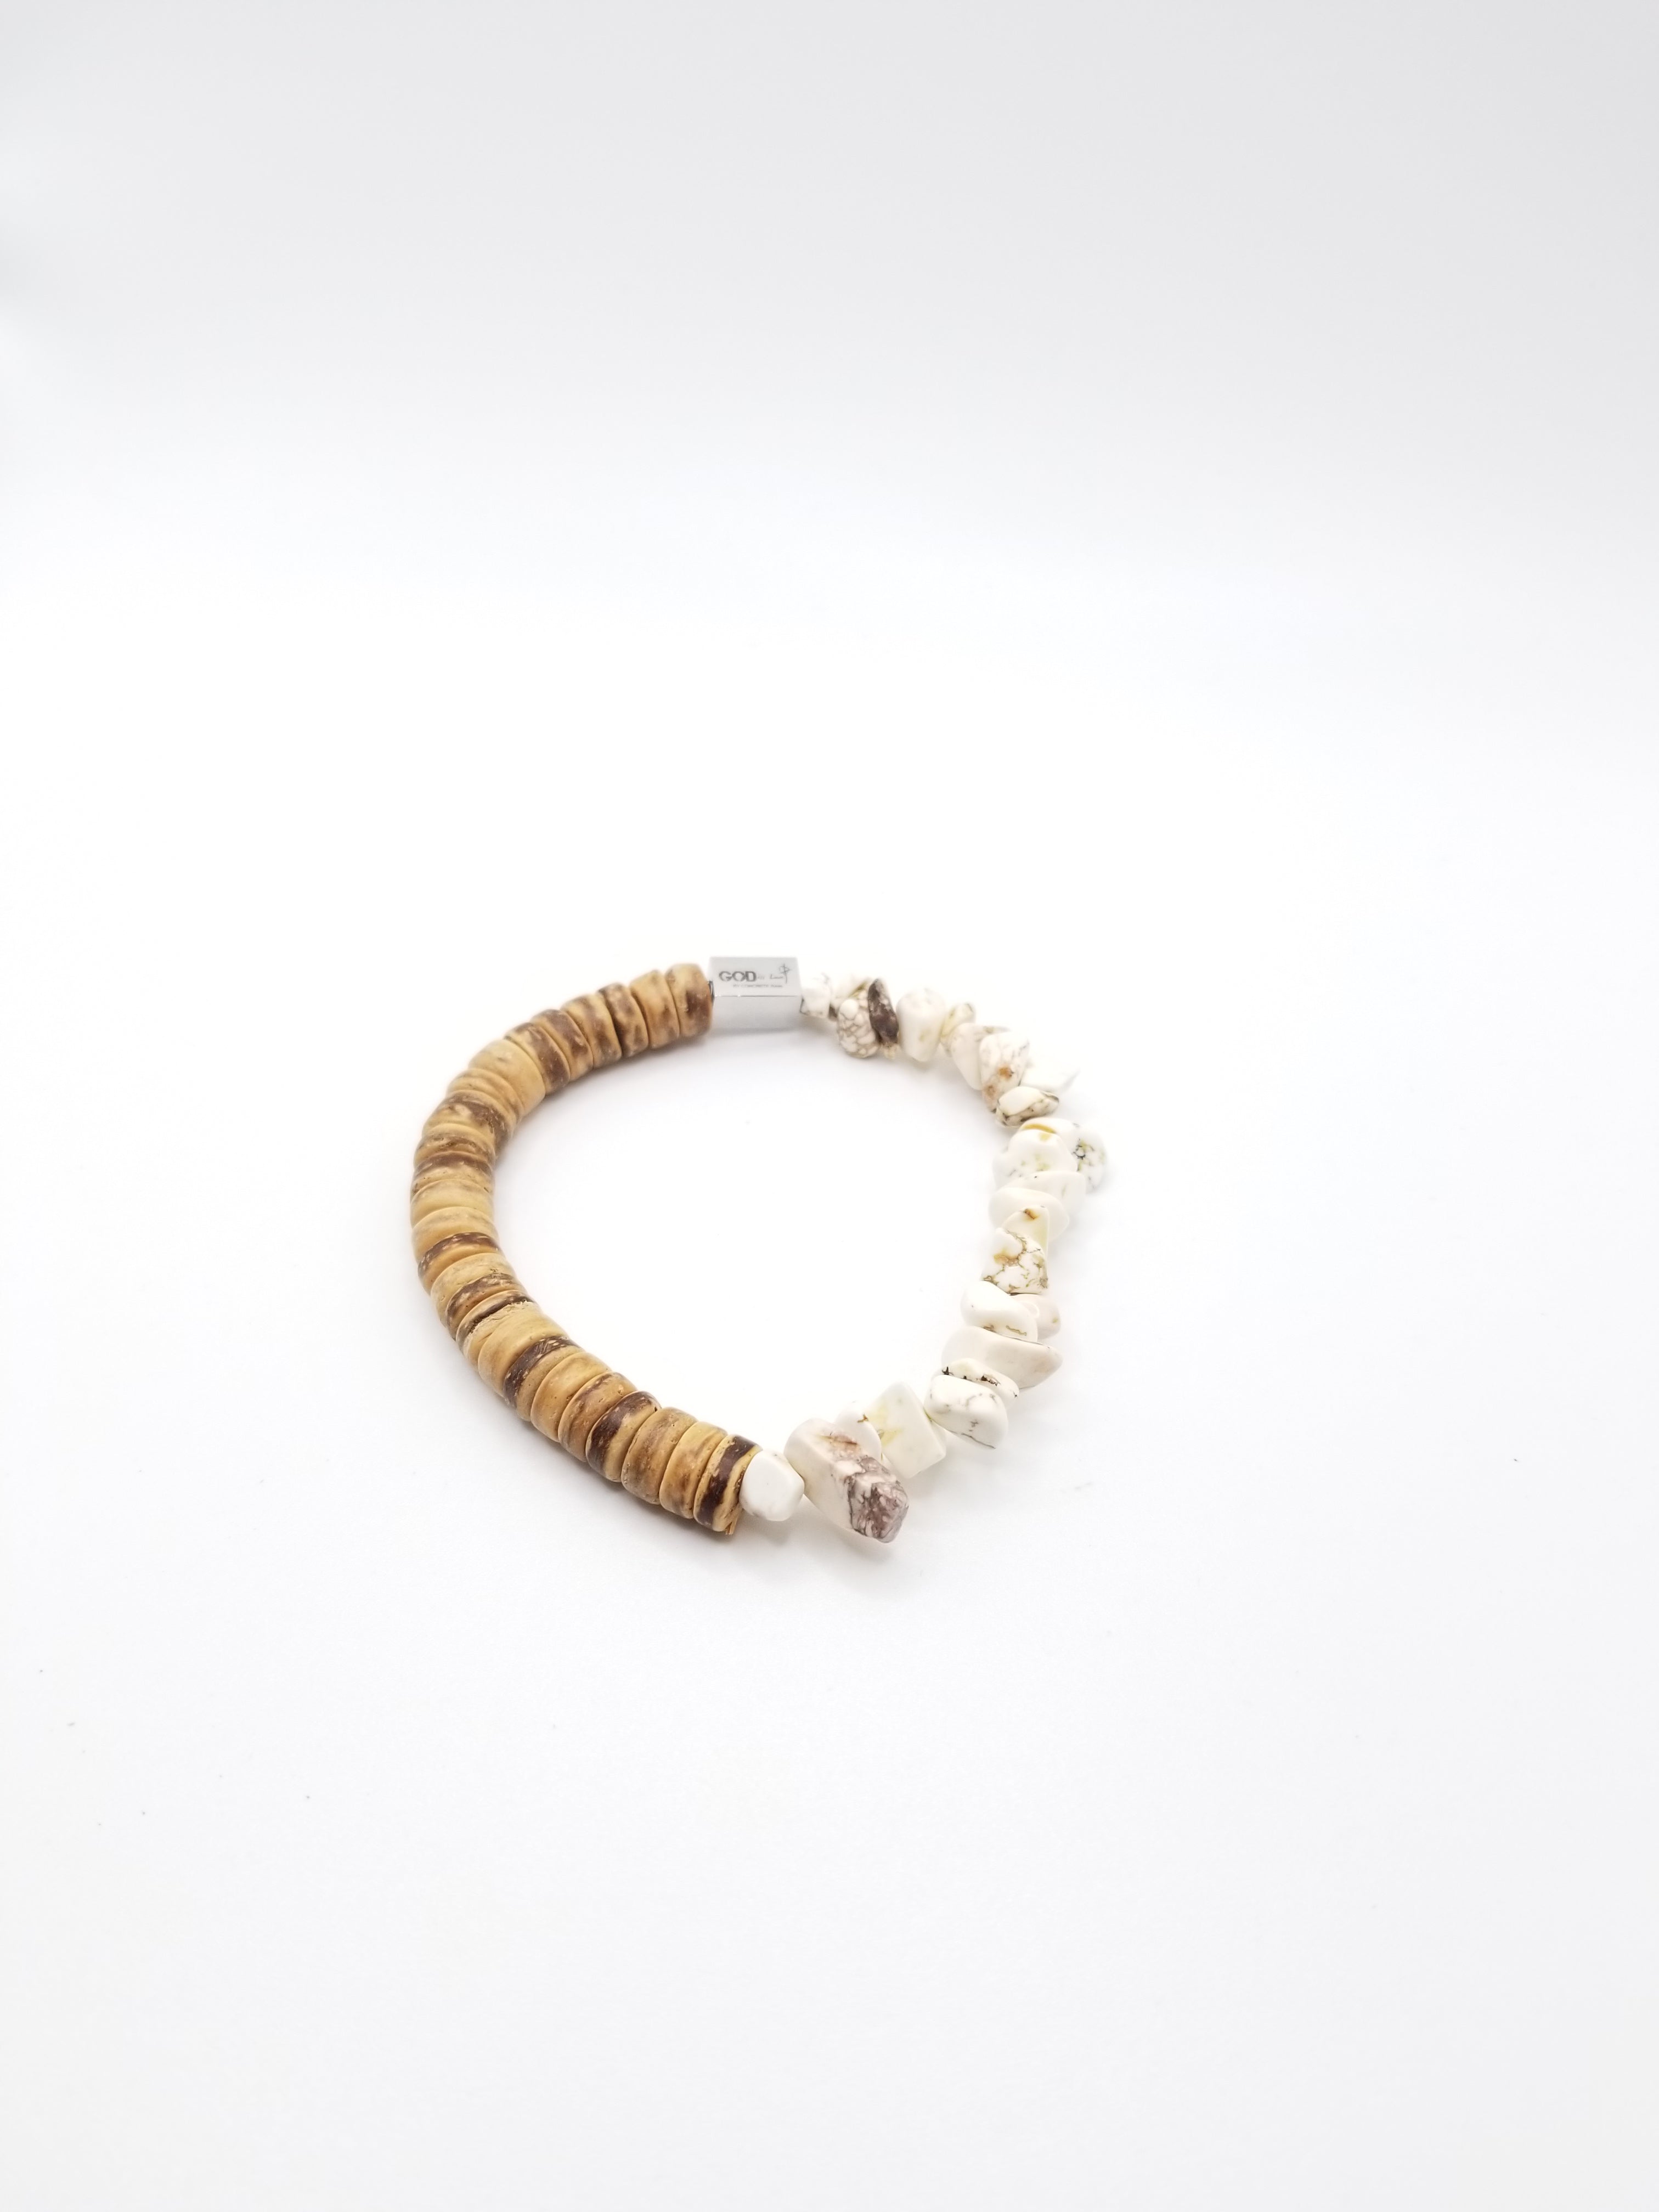 Shell and Wooden Beaded Bracelet